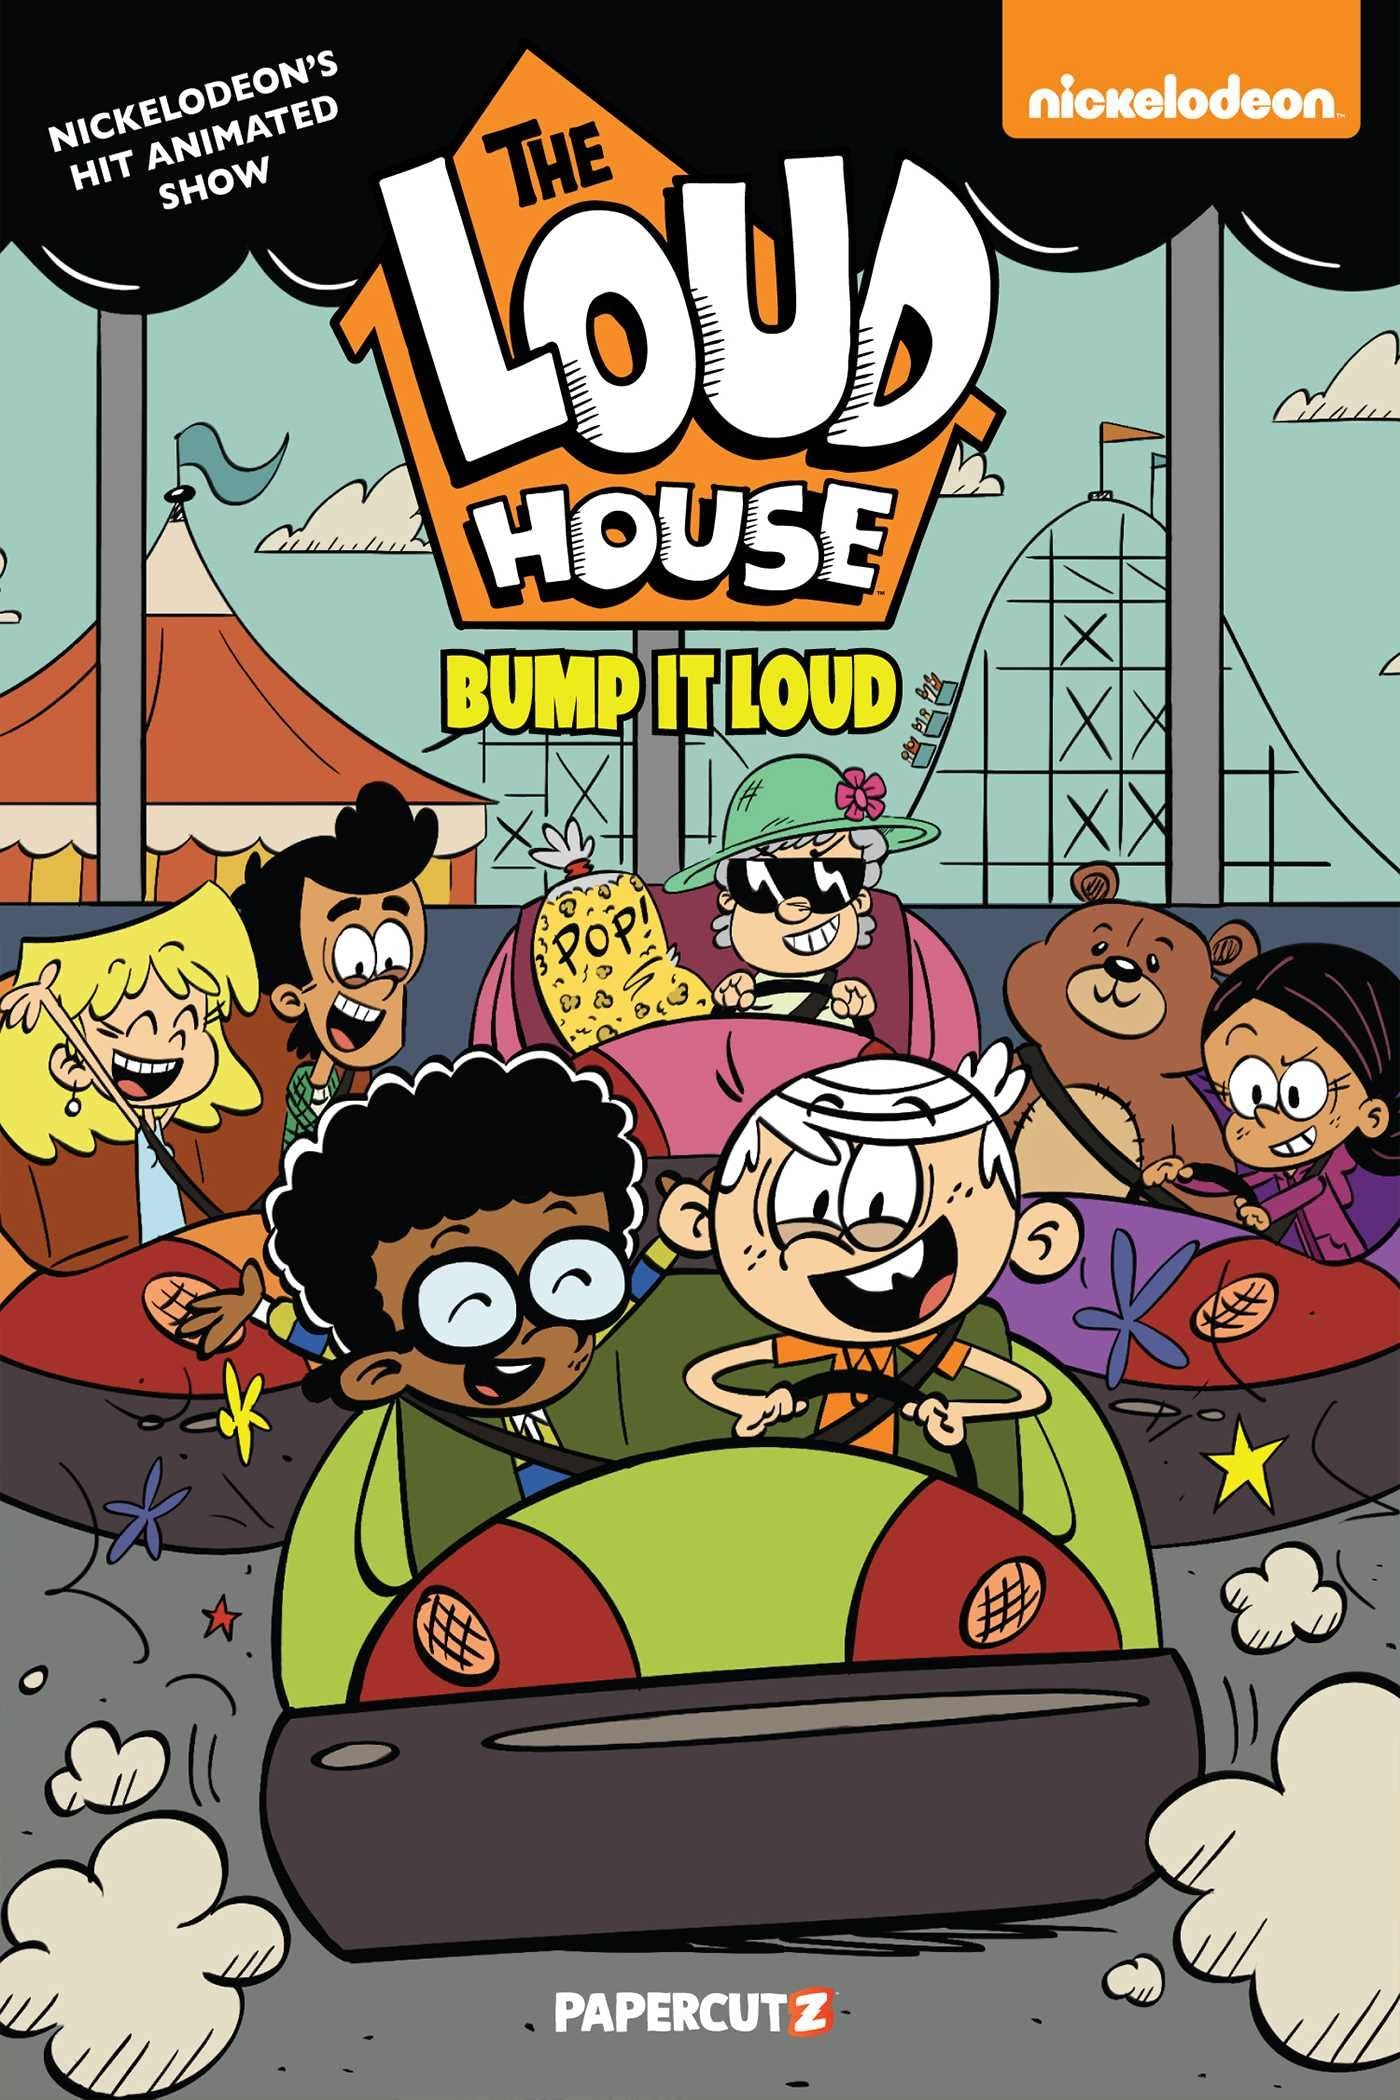 Bump It Loud, The Loud House Encyclopedia